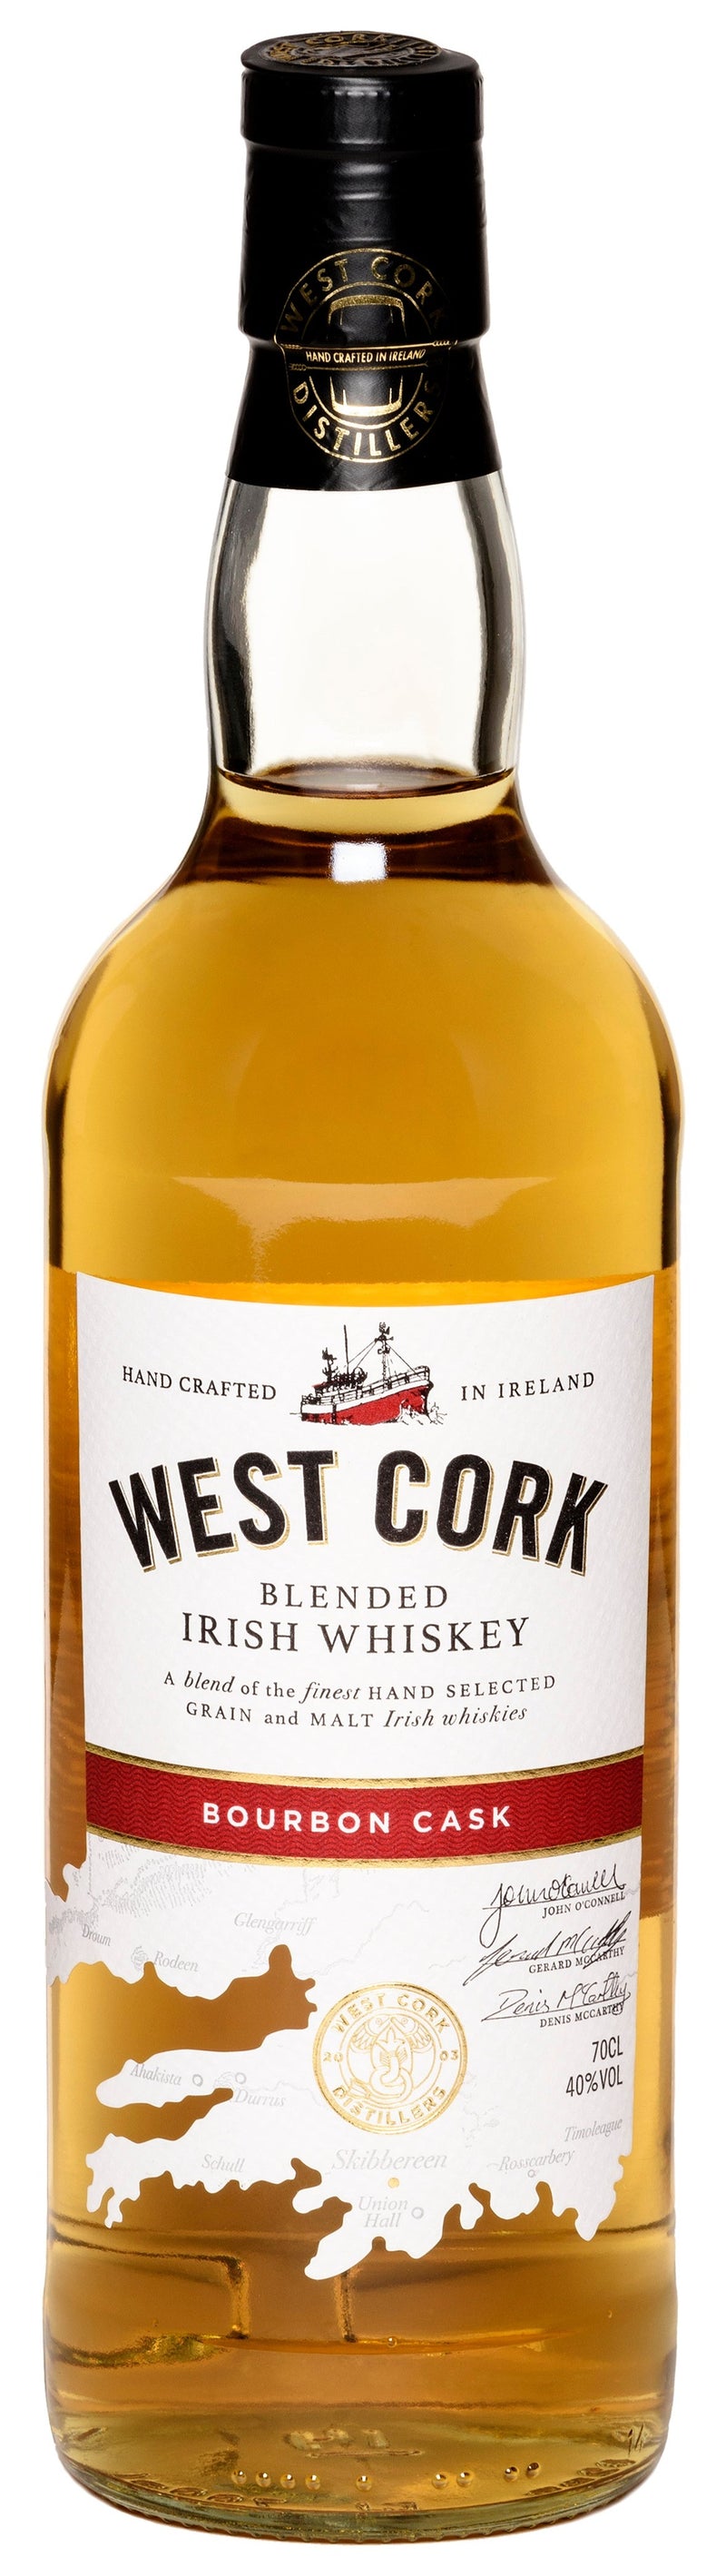 West Cork Bourbon Cask Irish Whisky 70cl